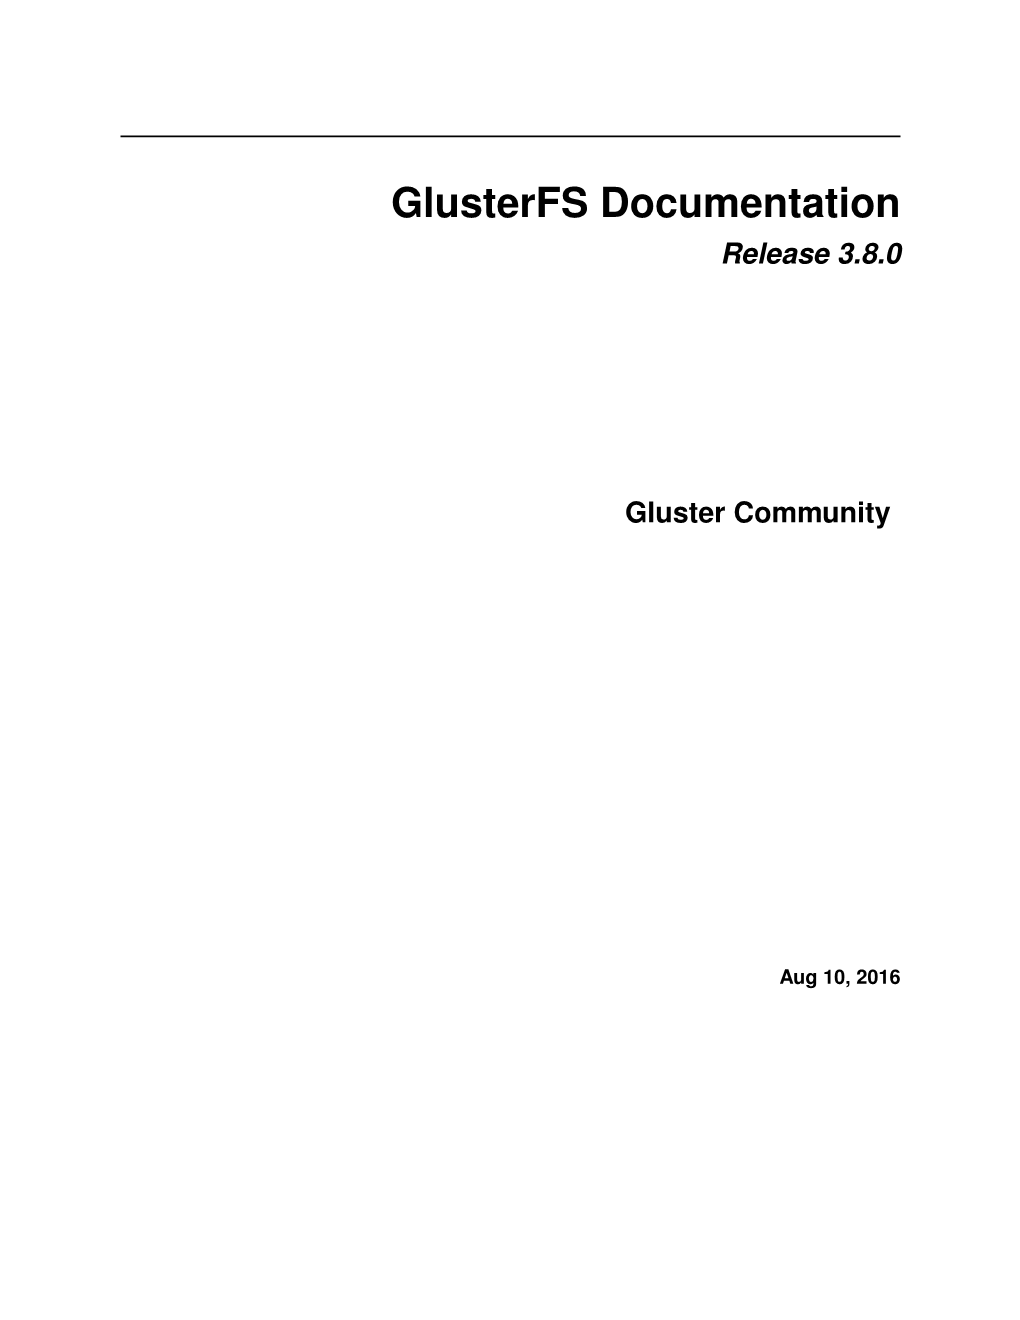 Glusterfs Documentation Release 3.8.0